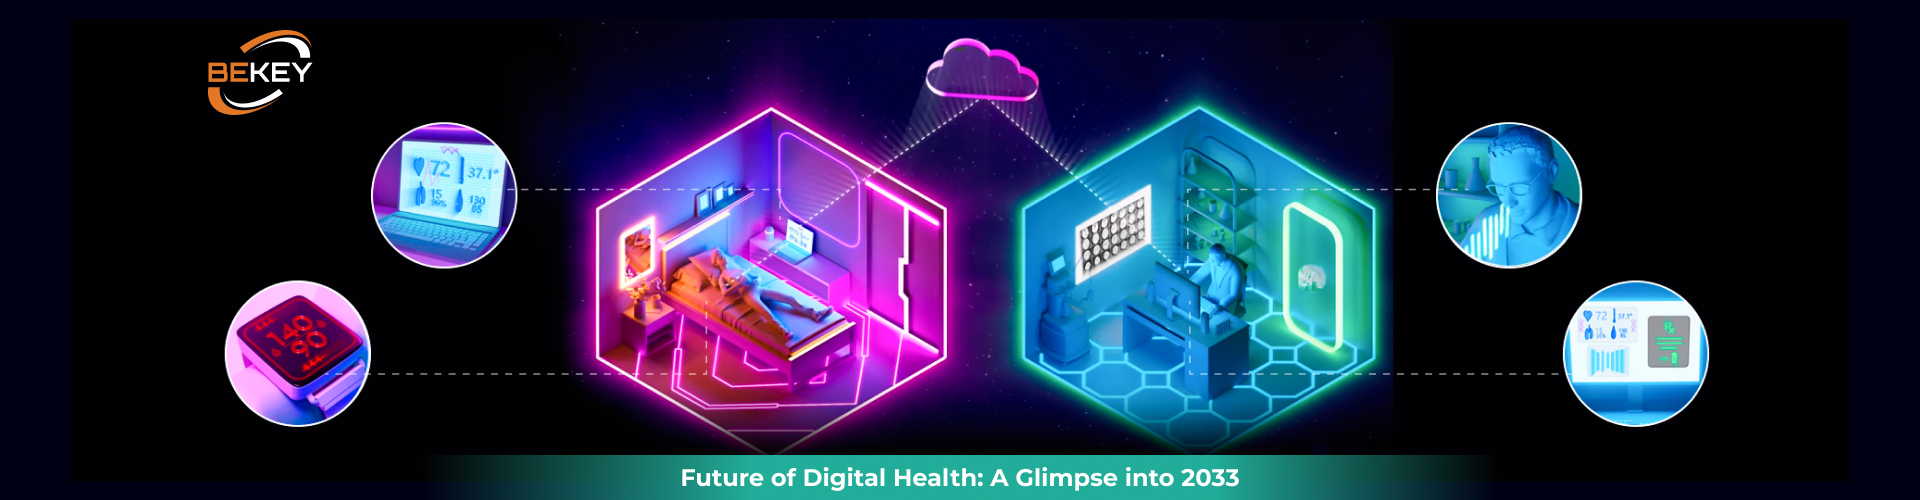 Future of Digital Health: A Glimpse into 2033 - image